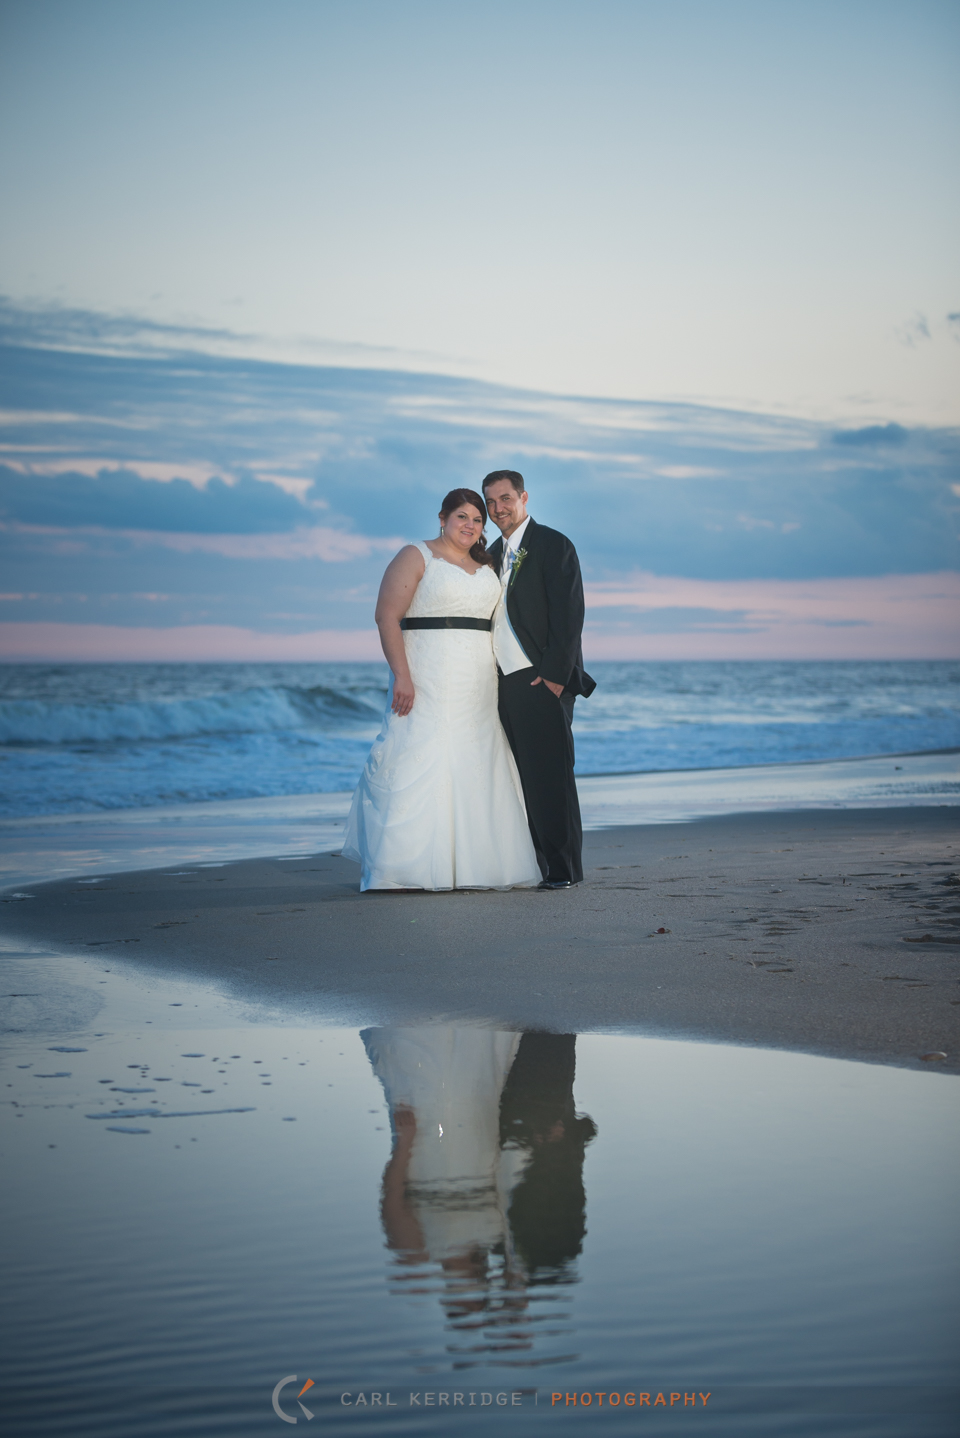 Myrtle Beach Wedding Photographer, Photojournalism, BW Wedding Image, Breakers Resort, Portraits, Beach, reflection